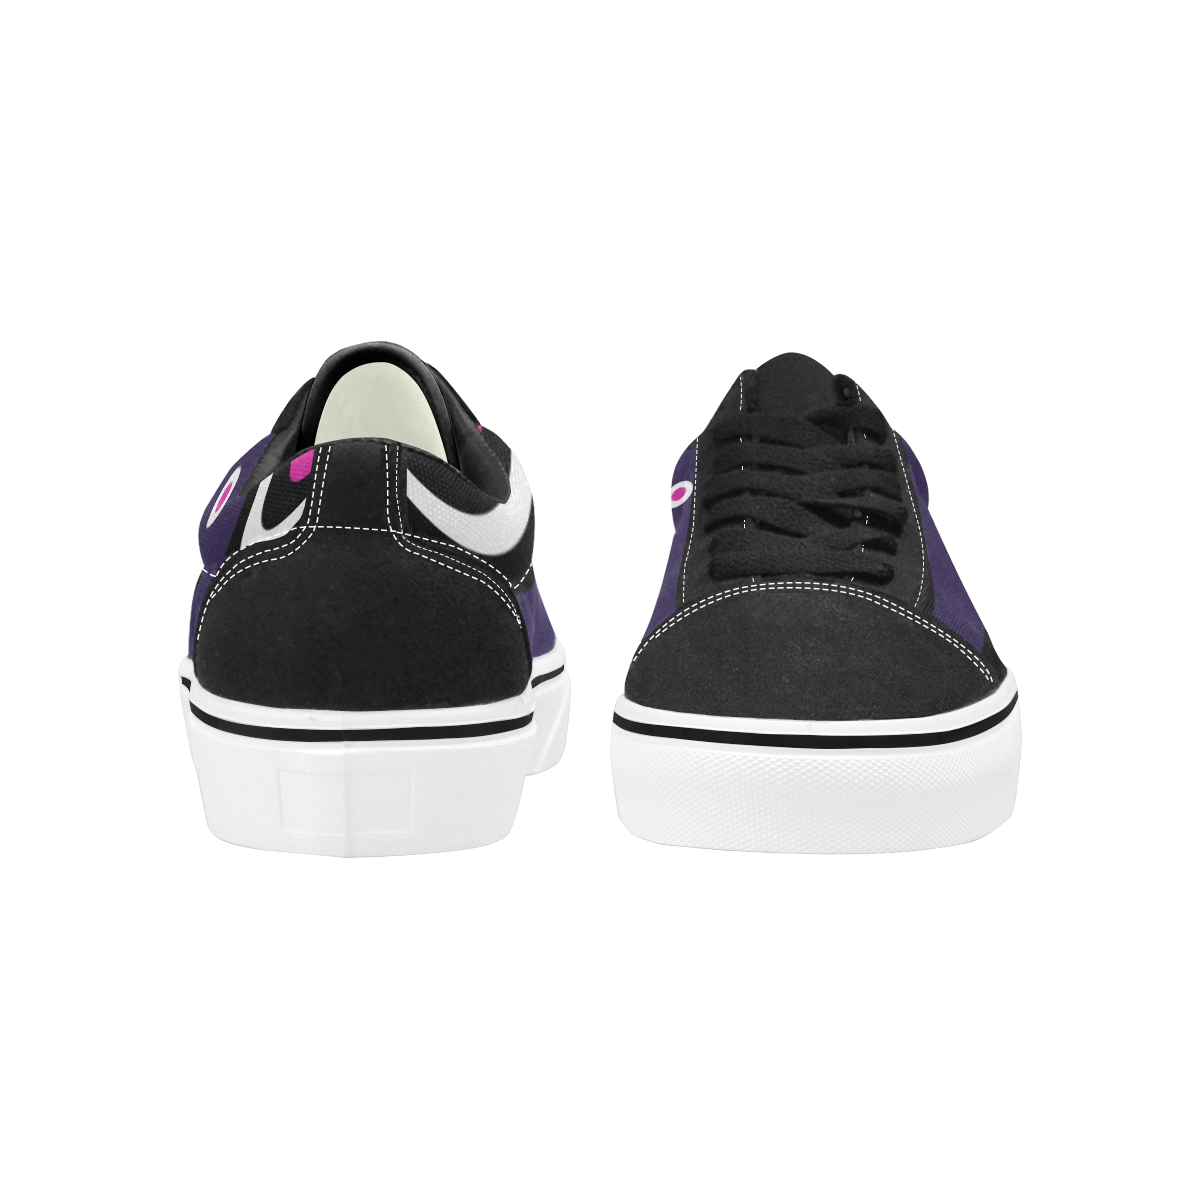 Pink Purple Tiki Tribal Women's Low Top Skateboarding Shoes/Large (Model E001-2)